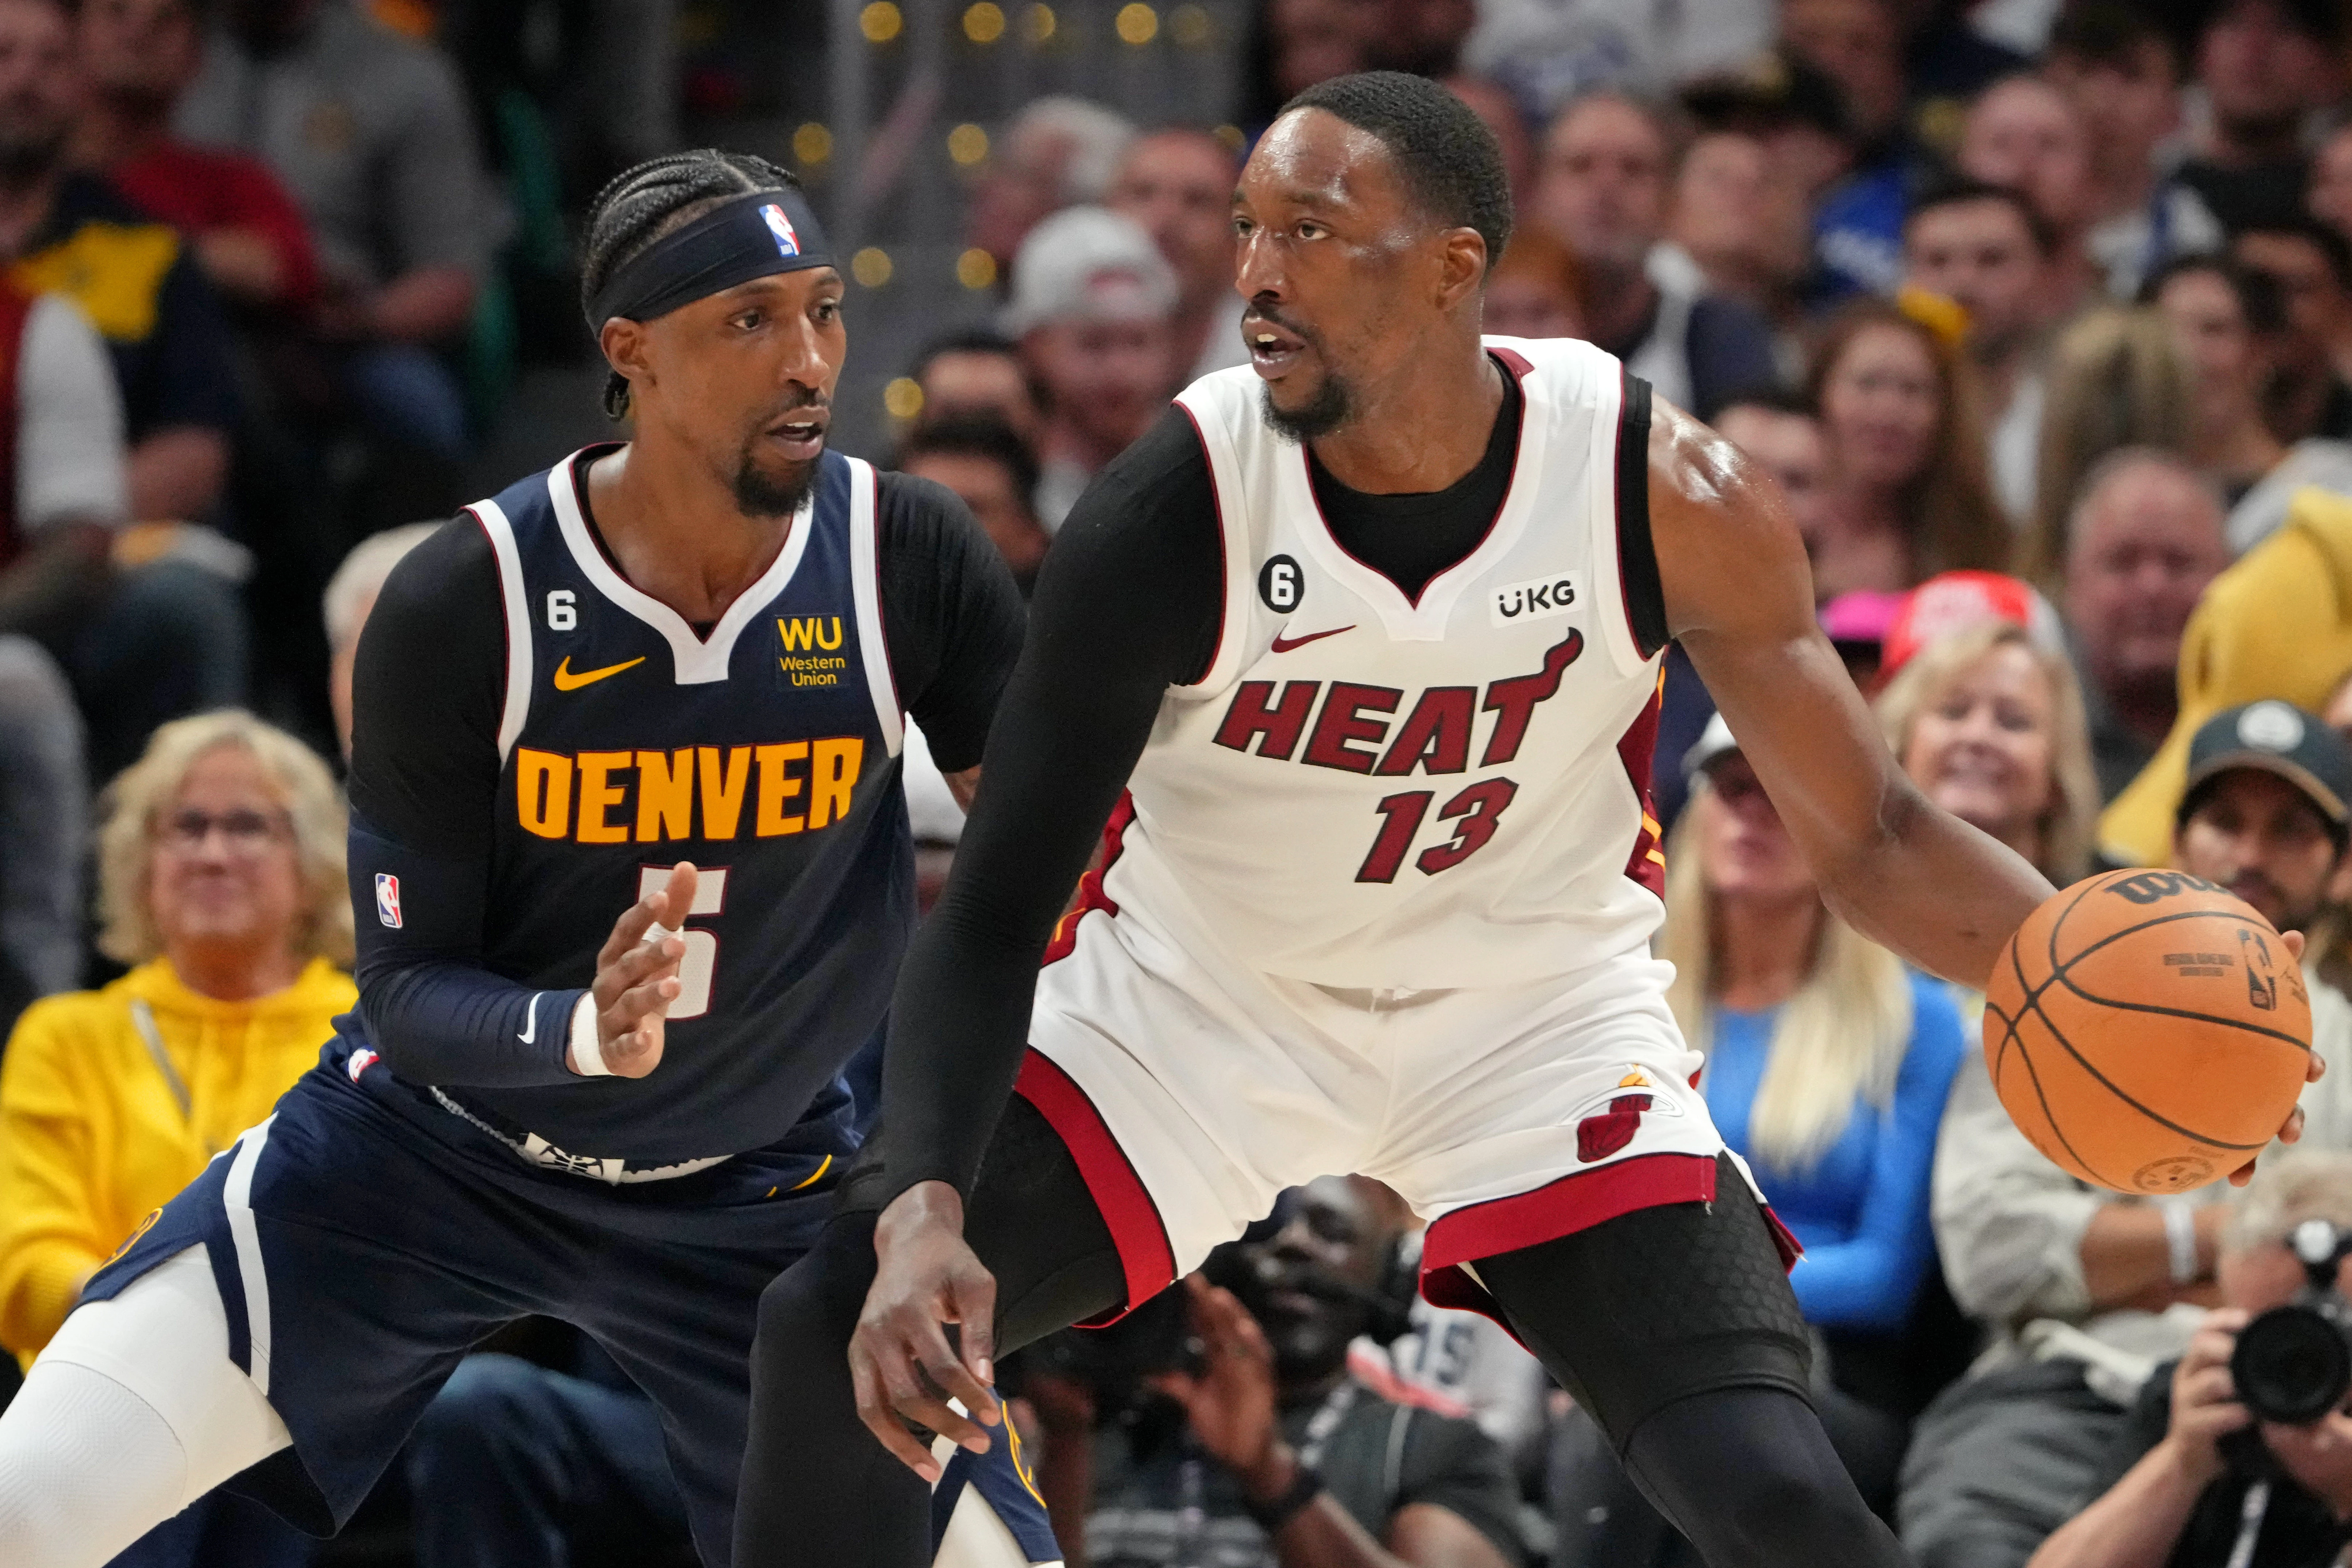 Gabe Vincent NBA Playoffs Player Props: Heat vs. Nuggets